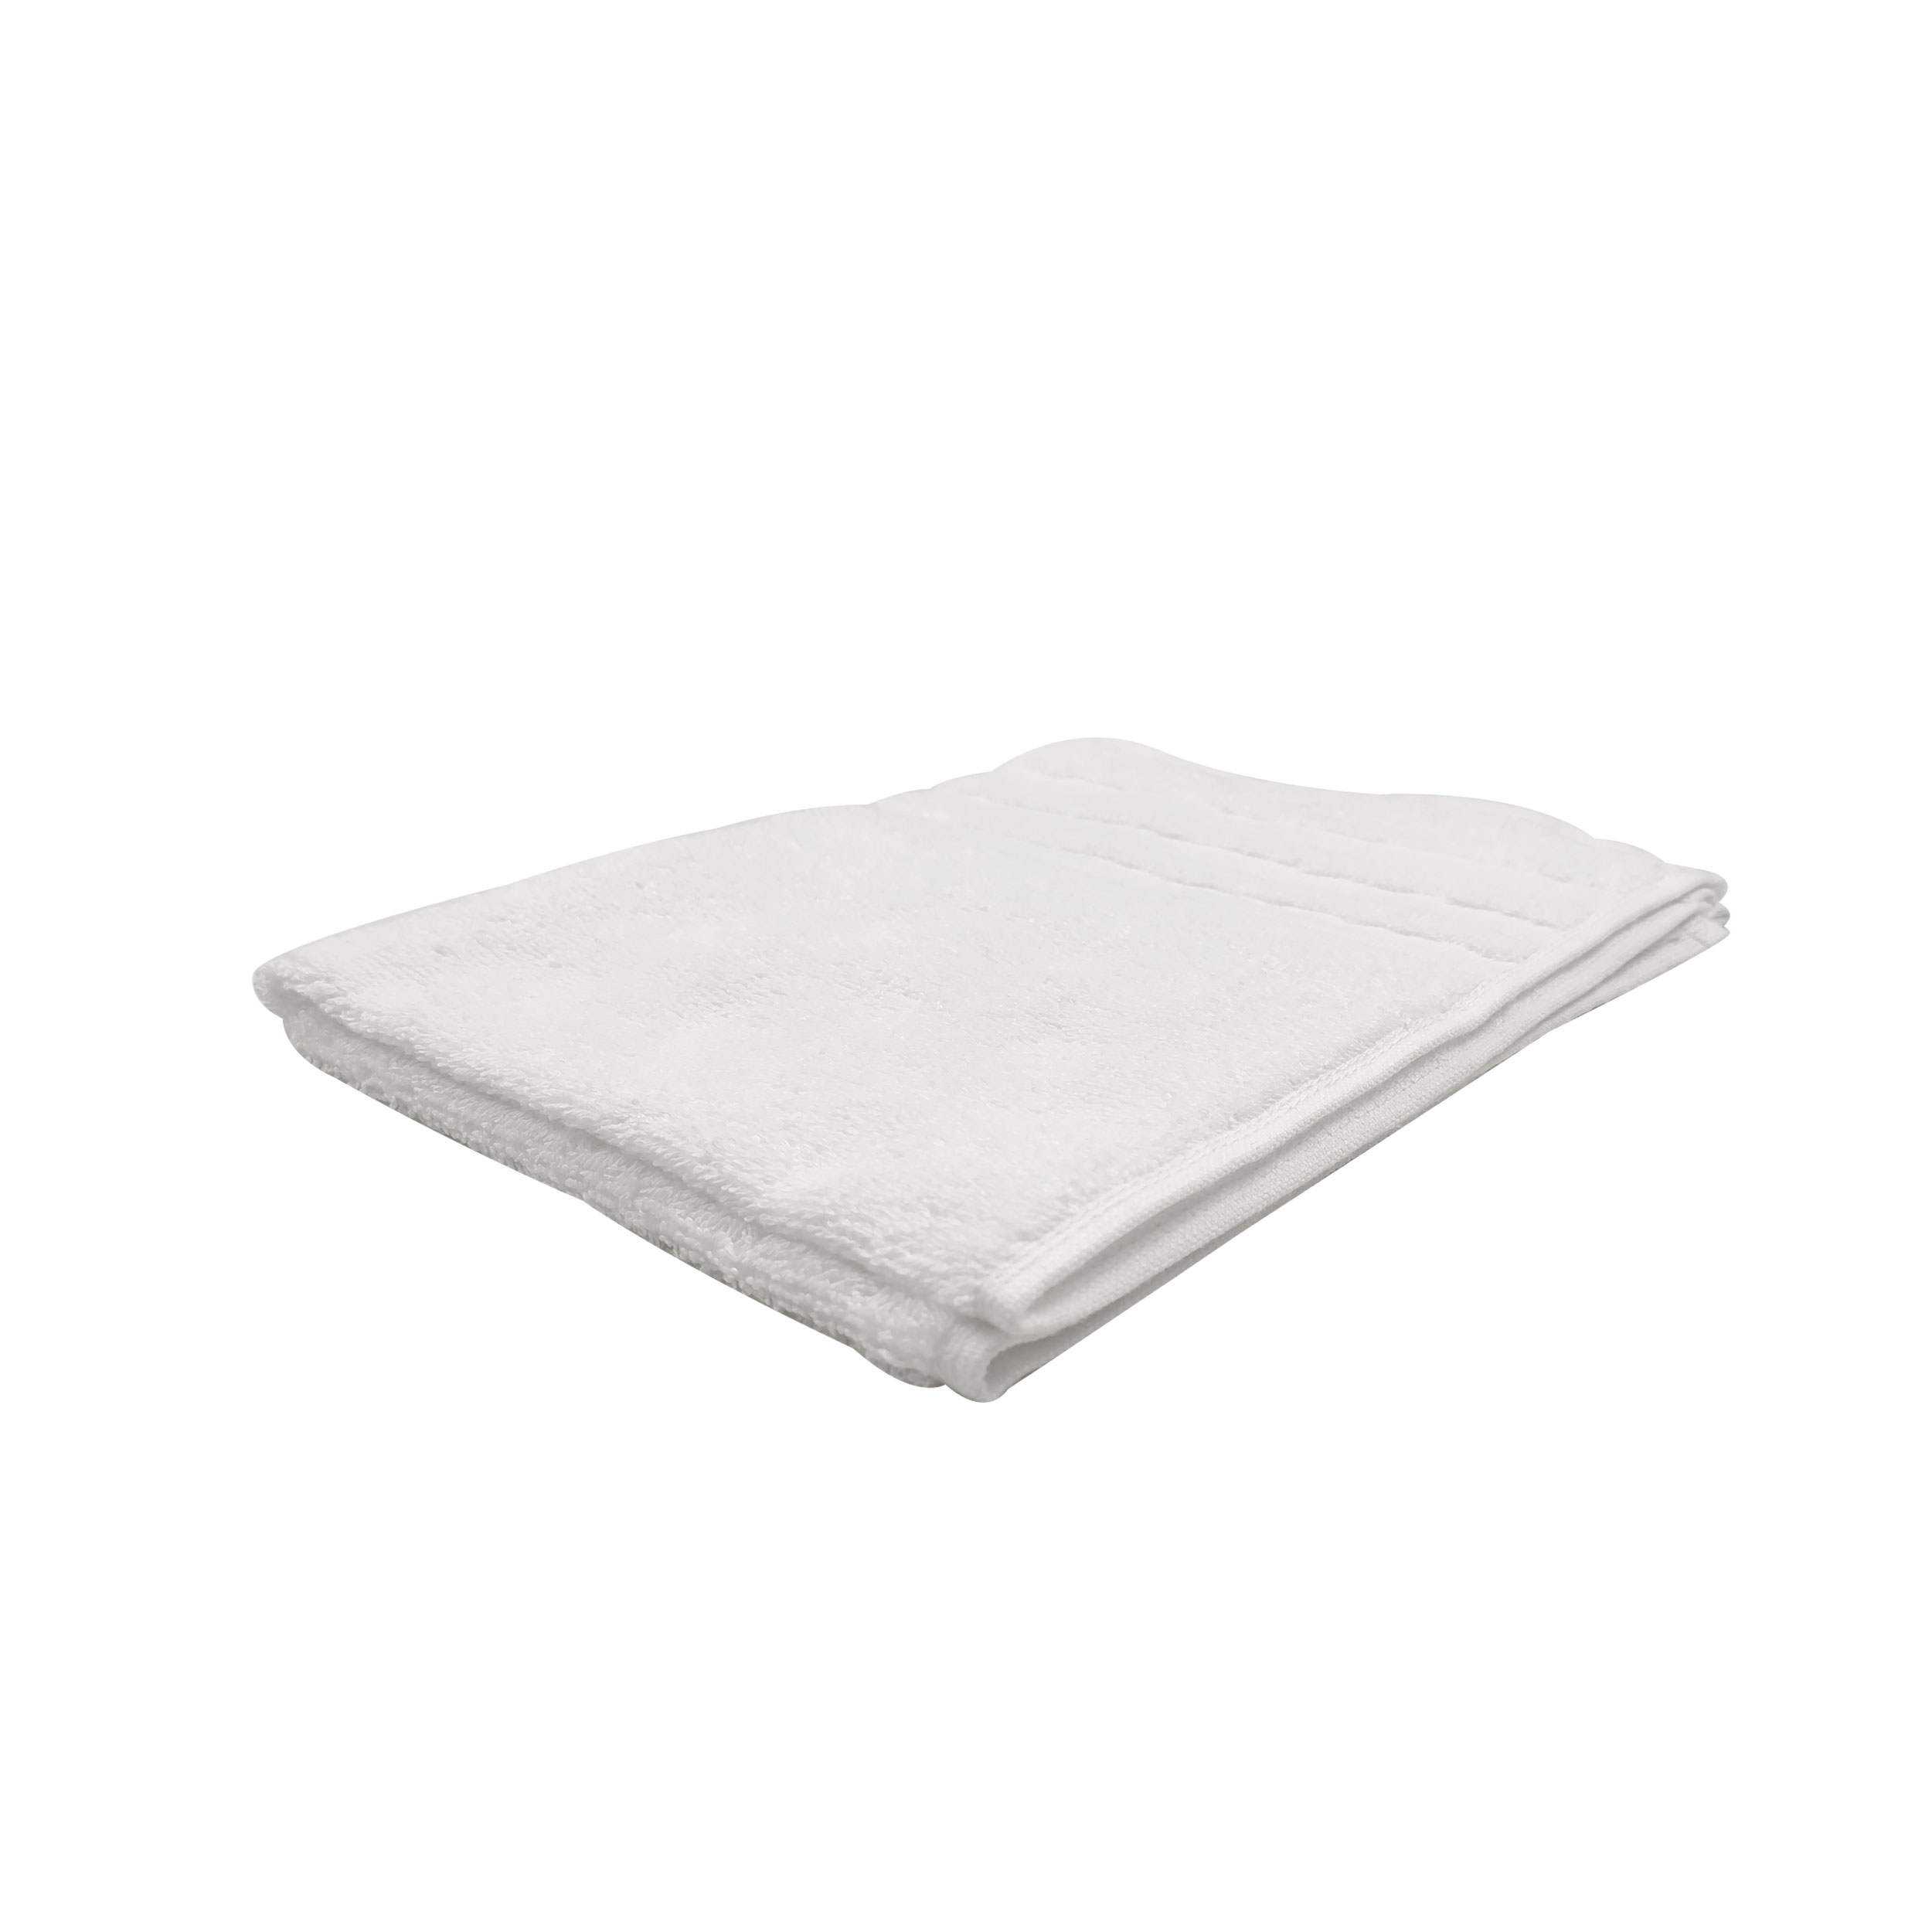 shop-online-asciugamano-di-cotone-bianco